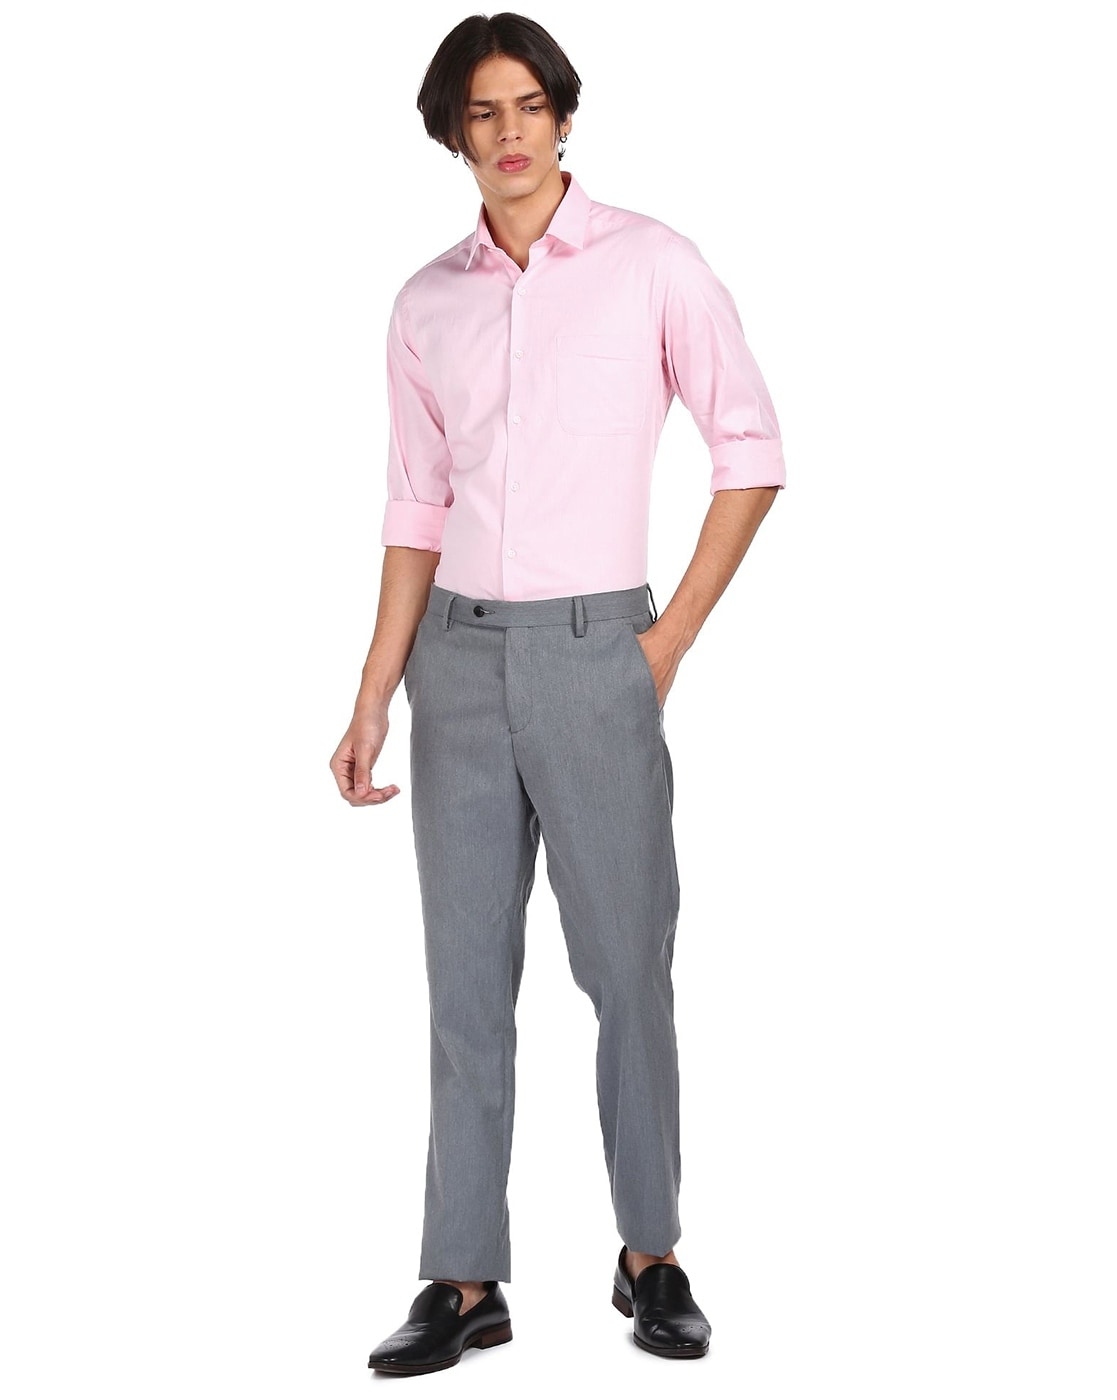 Pink shirts, gray pants, and brown accessories make for a good, bolder____  | Pink shirt men, Pink dress shirt, Mens outfits